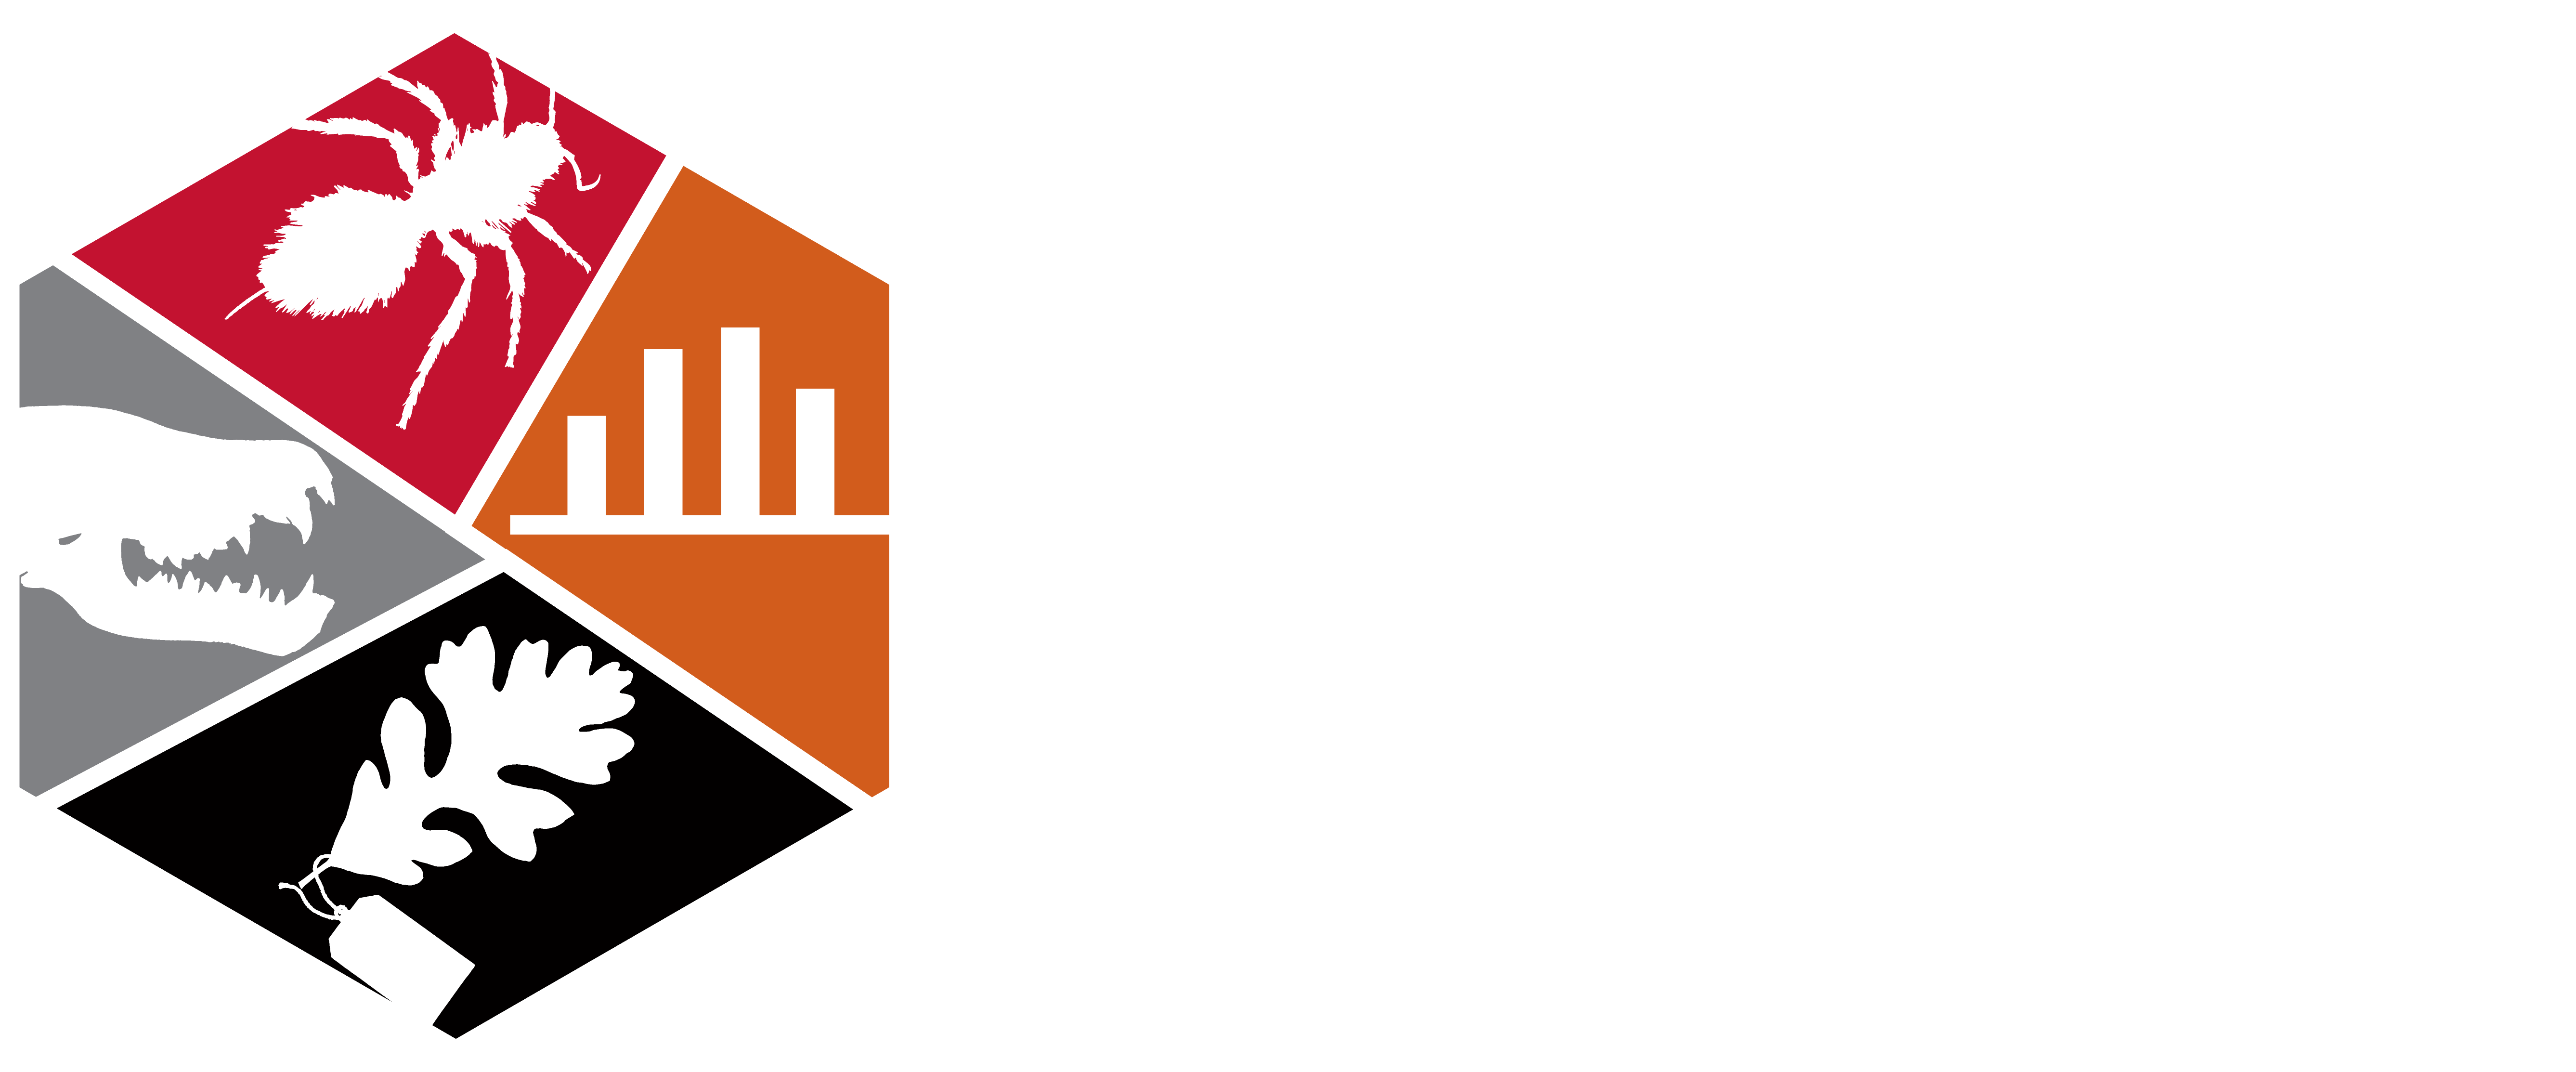 Epic Bioscience logo